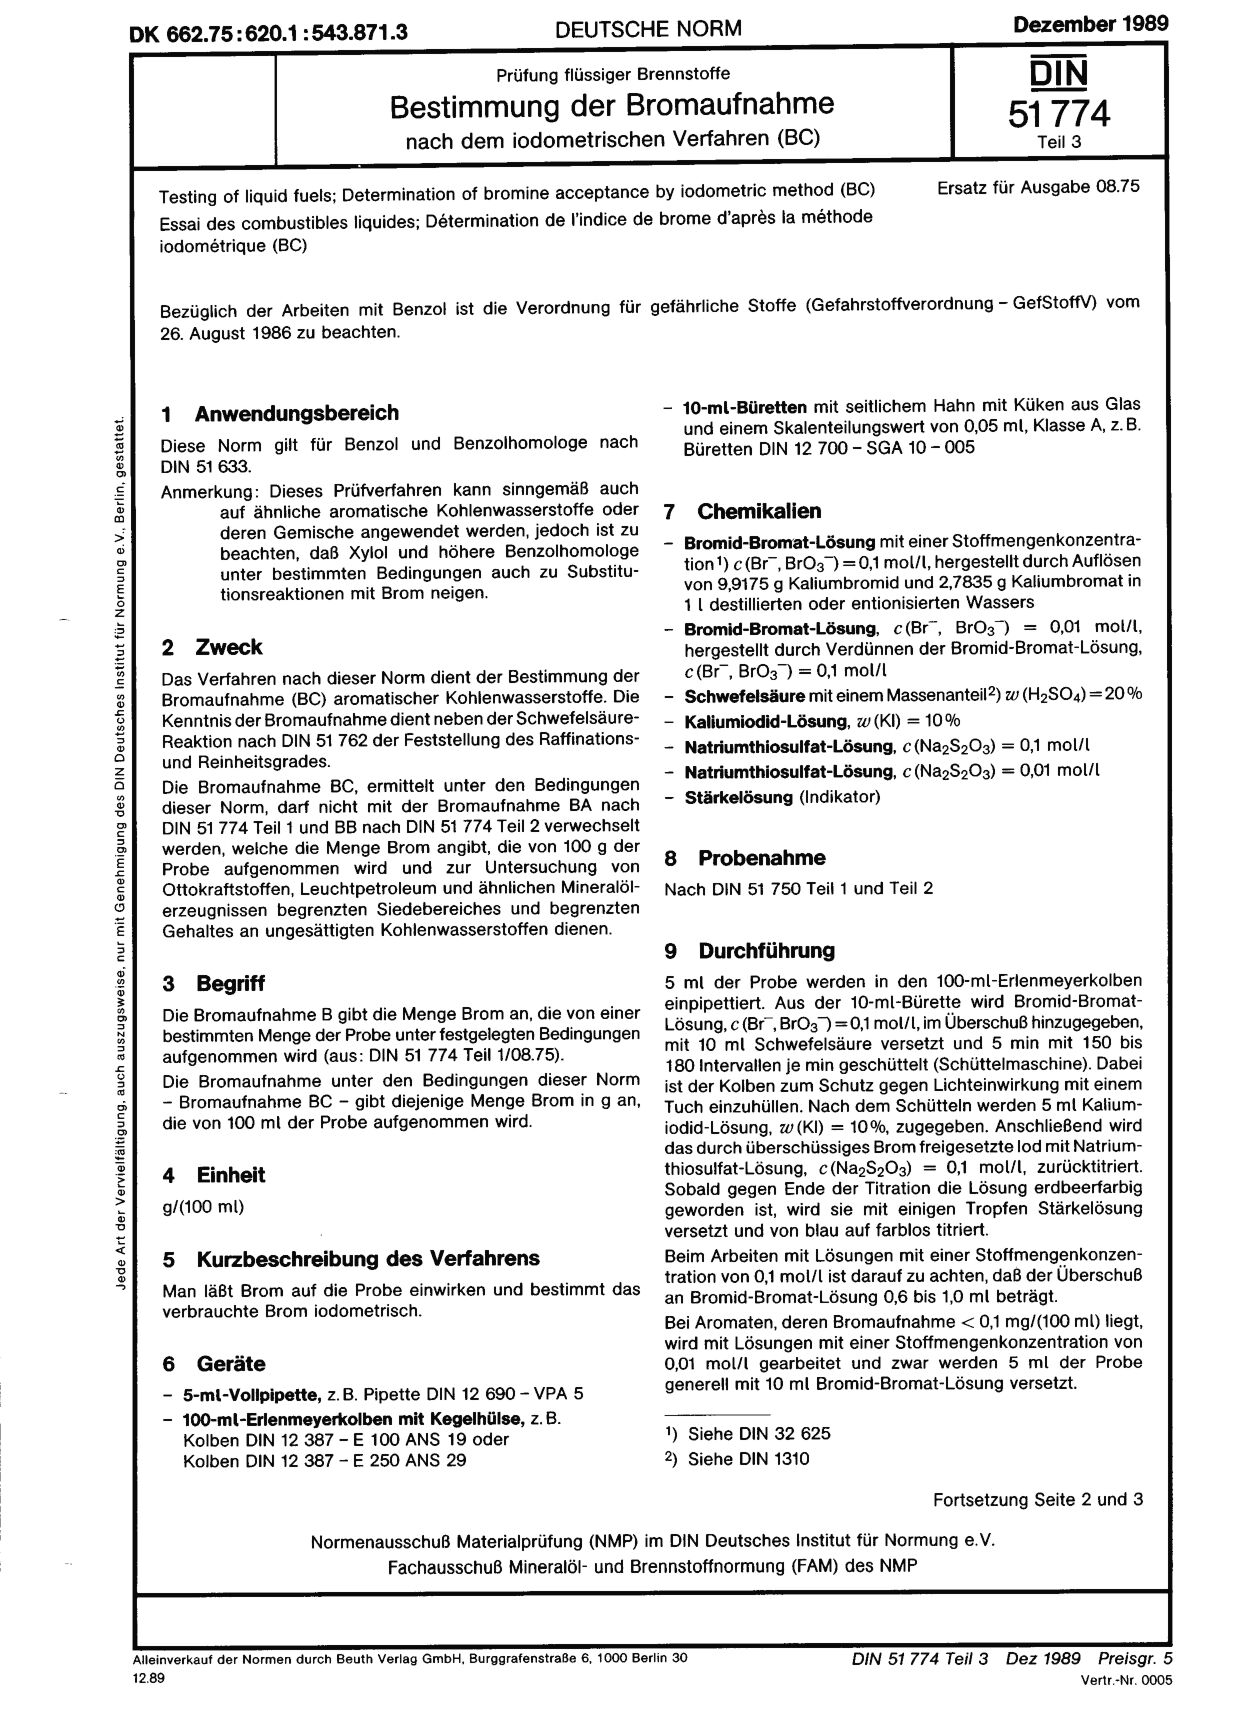 DIN 51774-3:1989封面图